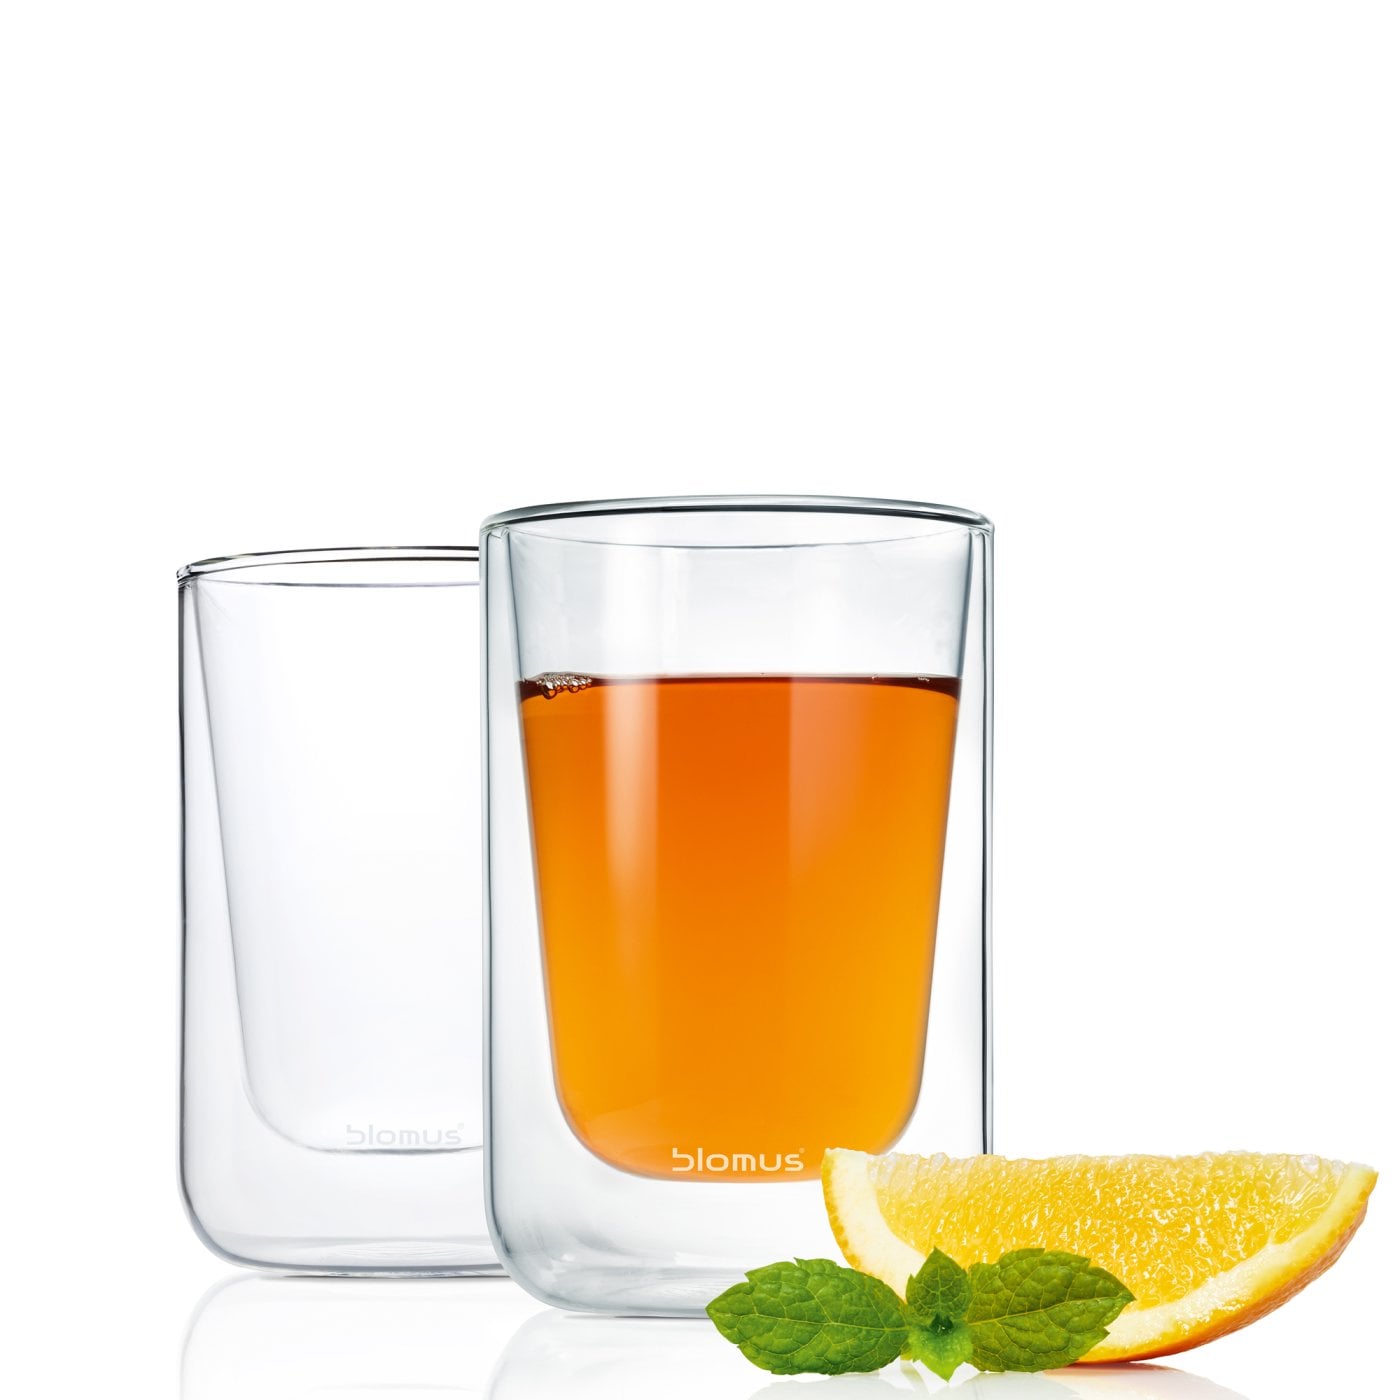 Blomus 63655 Insulated Latte Macchiato Tea Glasses, Set of 2